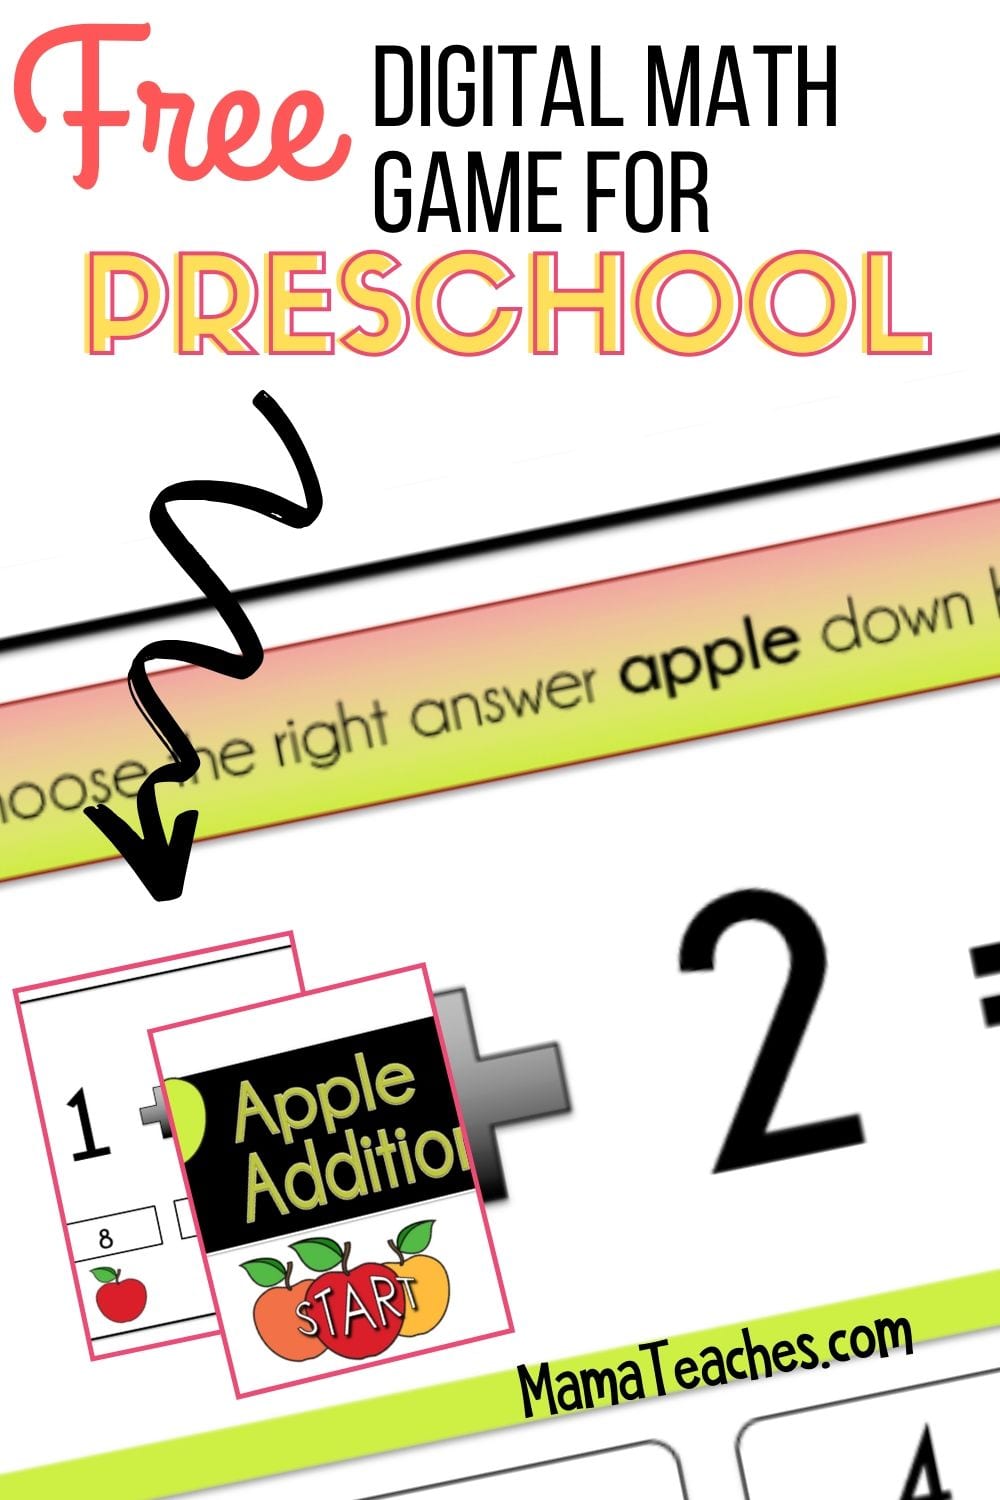 Free Digital Math Game for Preschoolers - Apple Addition